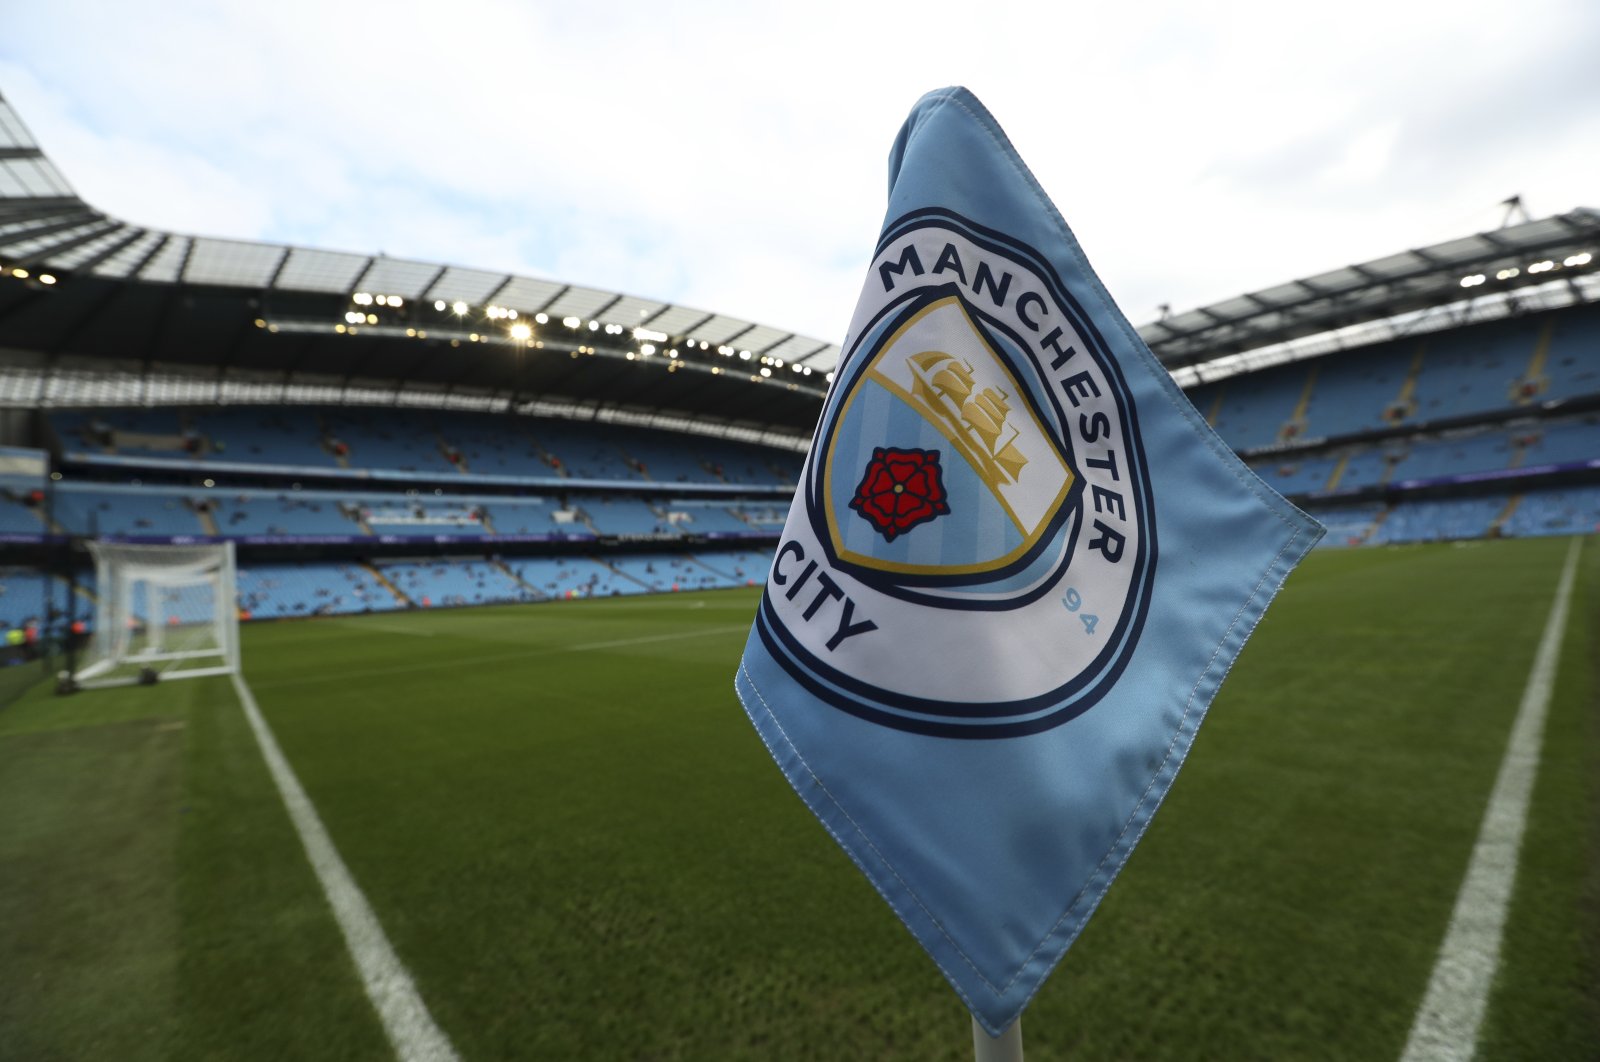 The Man City club logo decorates a corner flag before a Premier League match at the Etihad Stadium, Manchester, England, Sept. 1, 2018. (AP Photo)